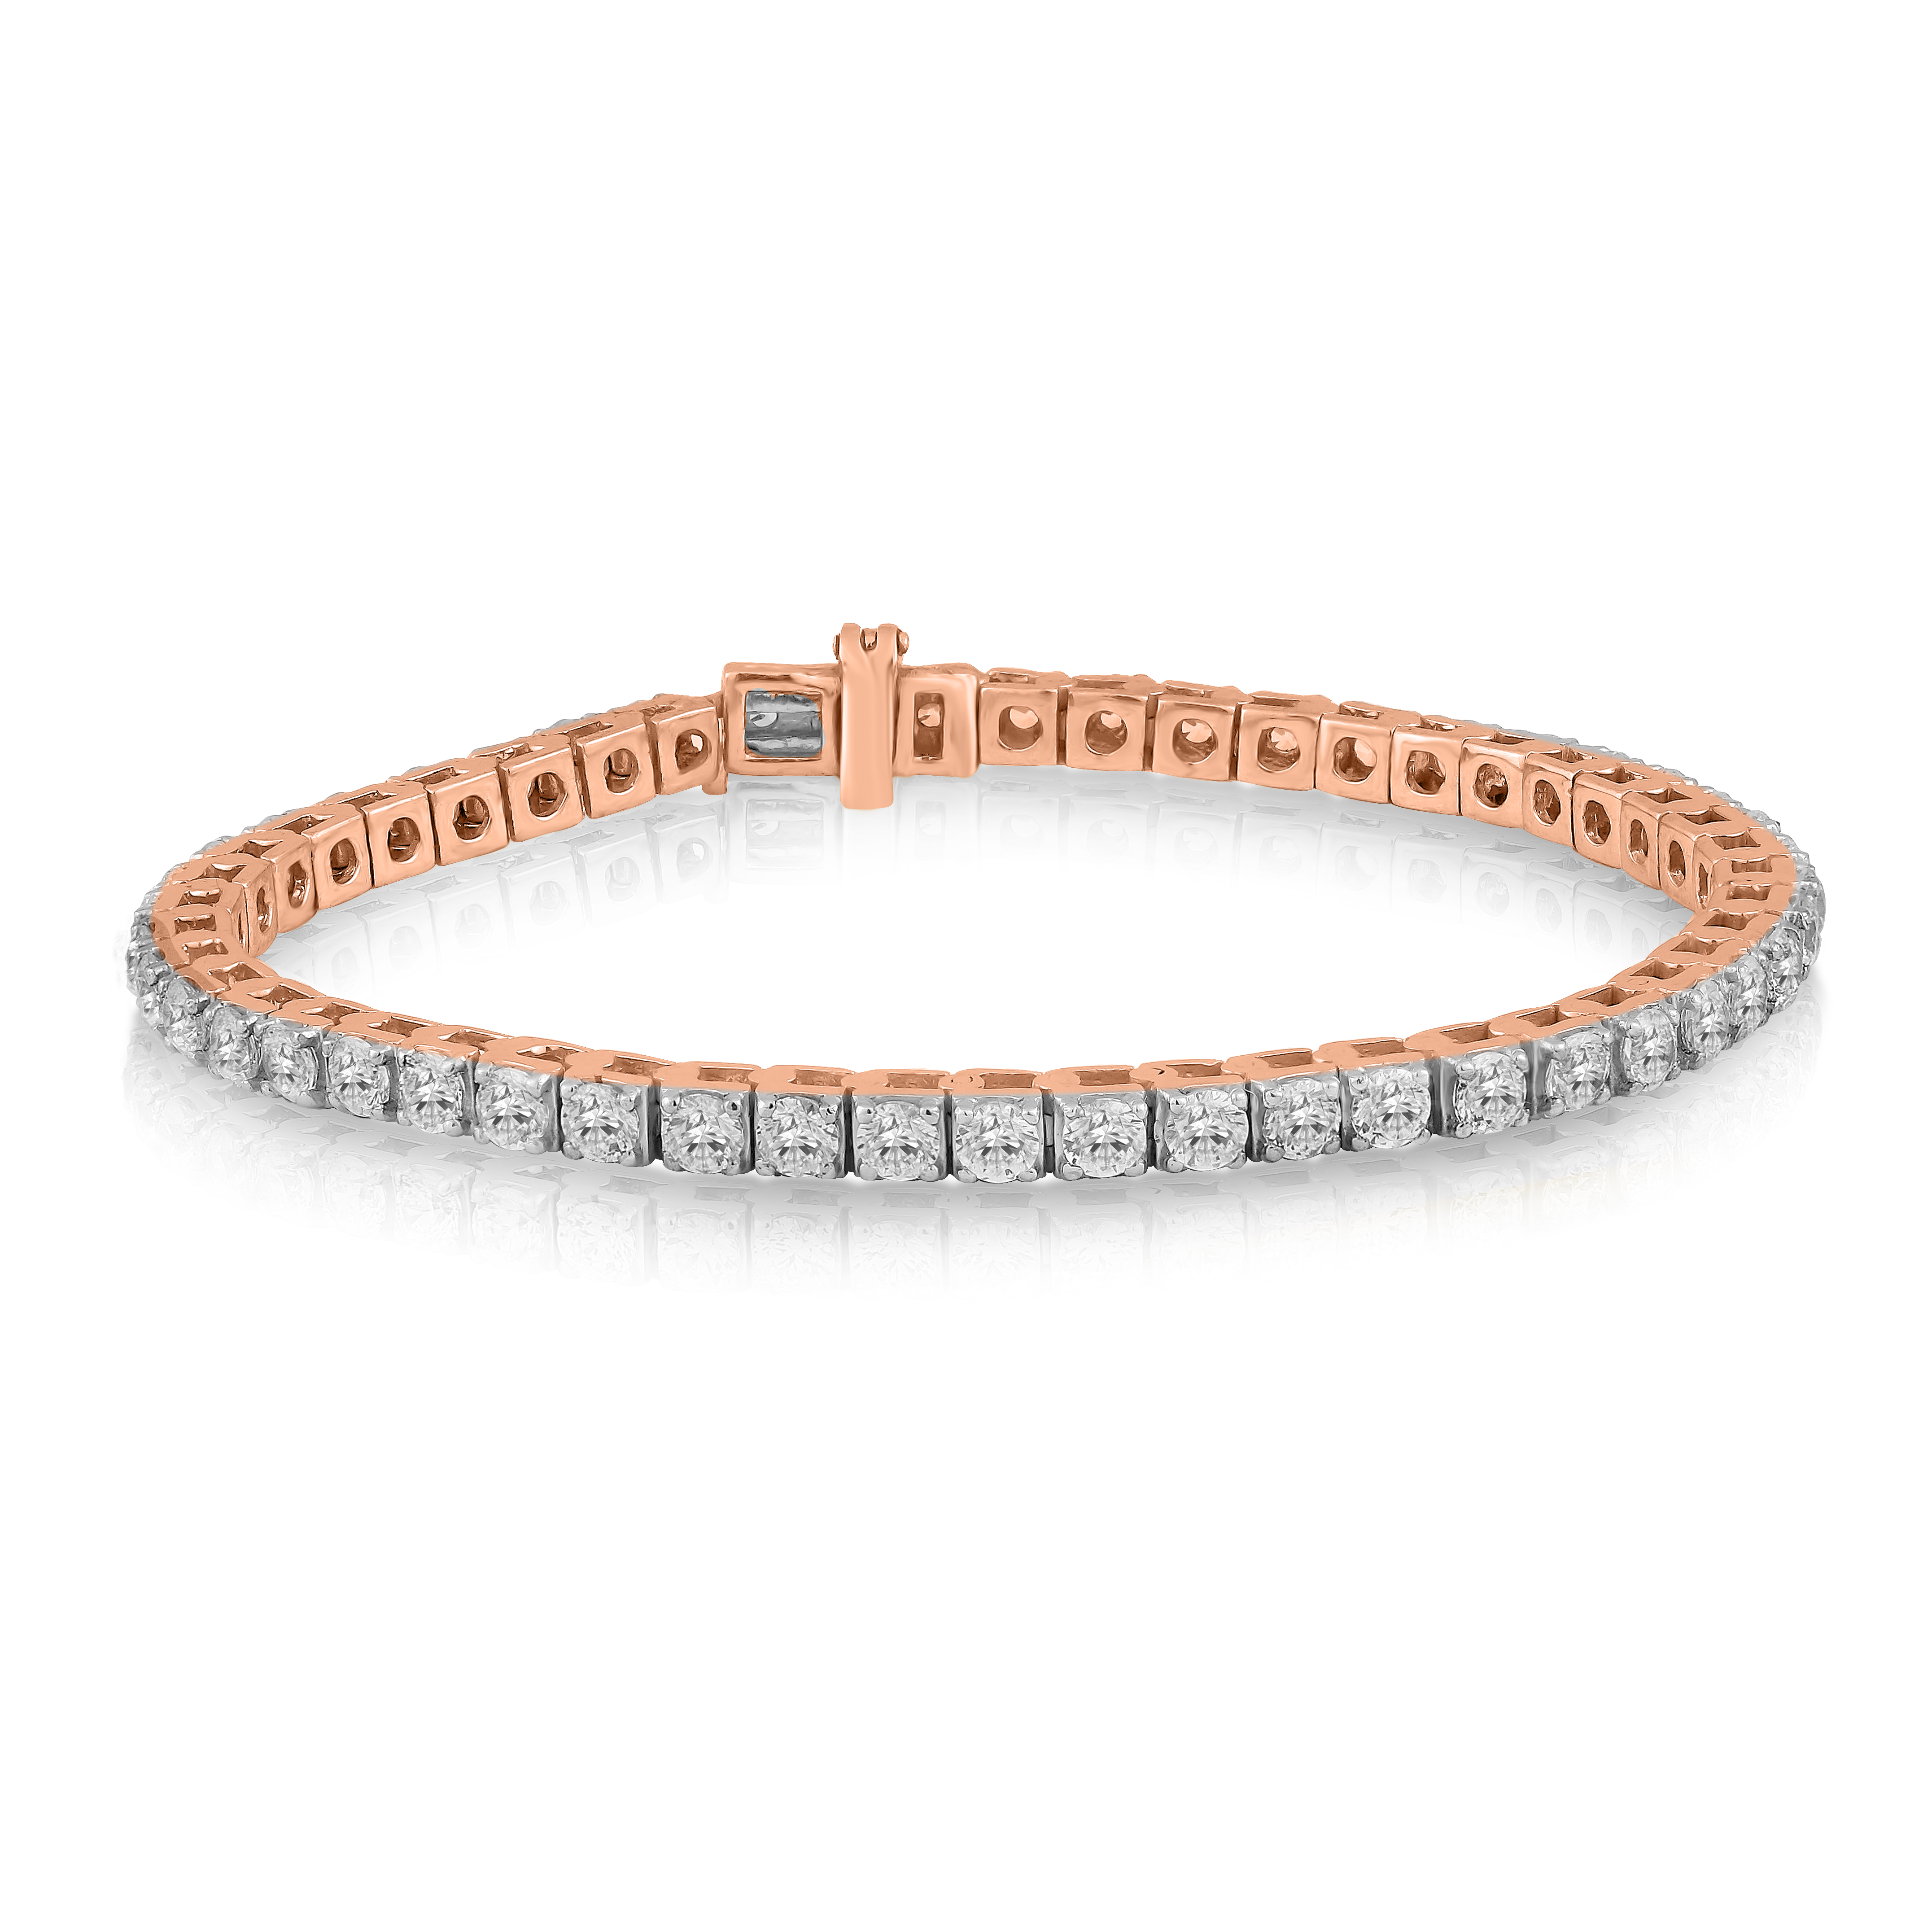 Buy Diamond Bracelets Online in India  EFIF Diamond Jewellery